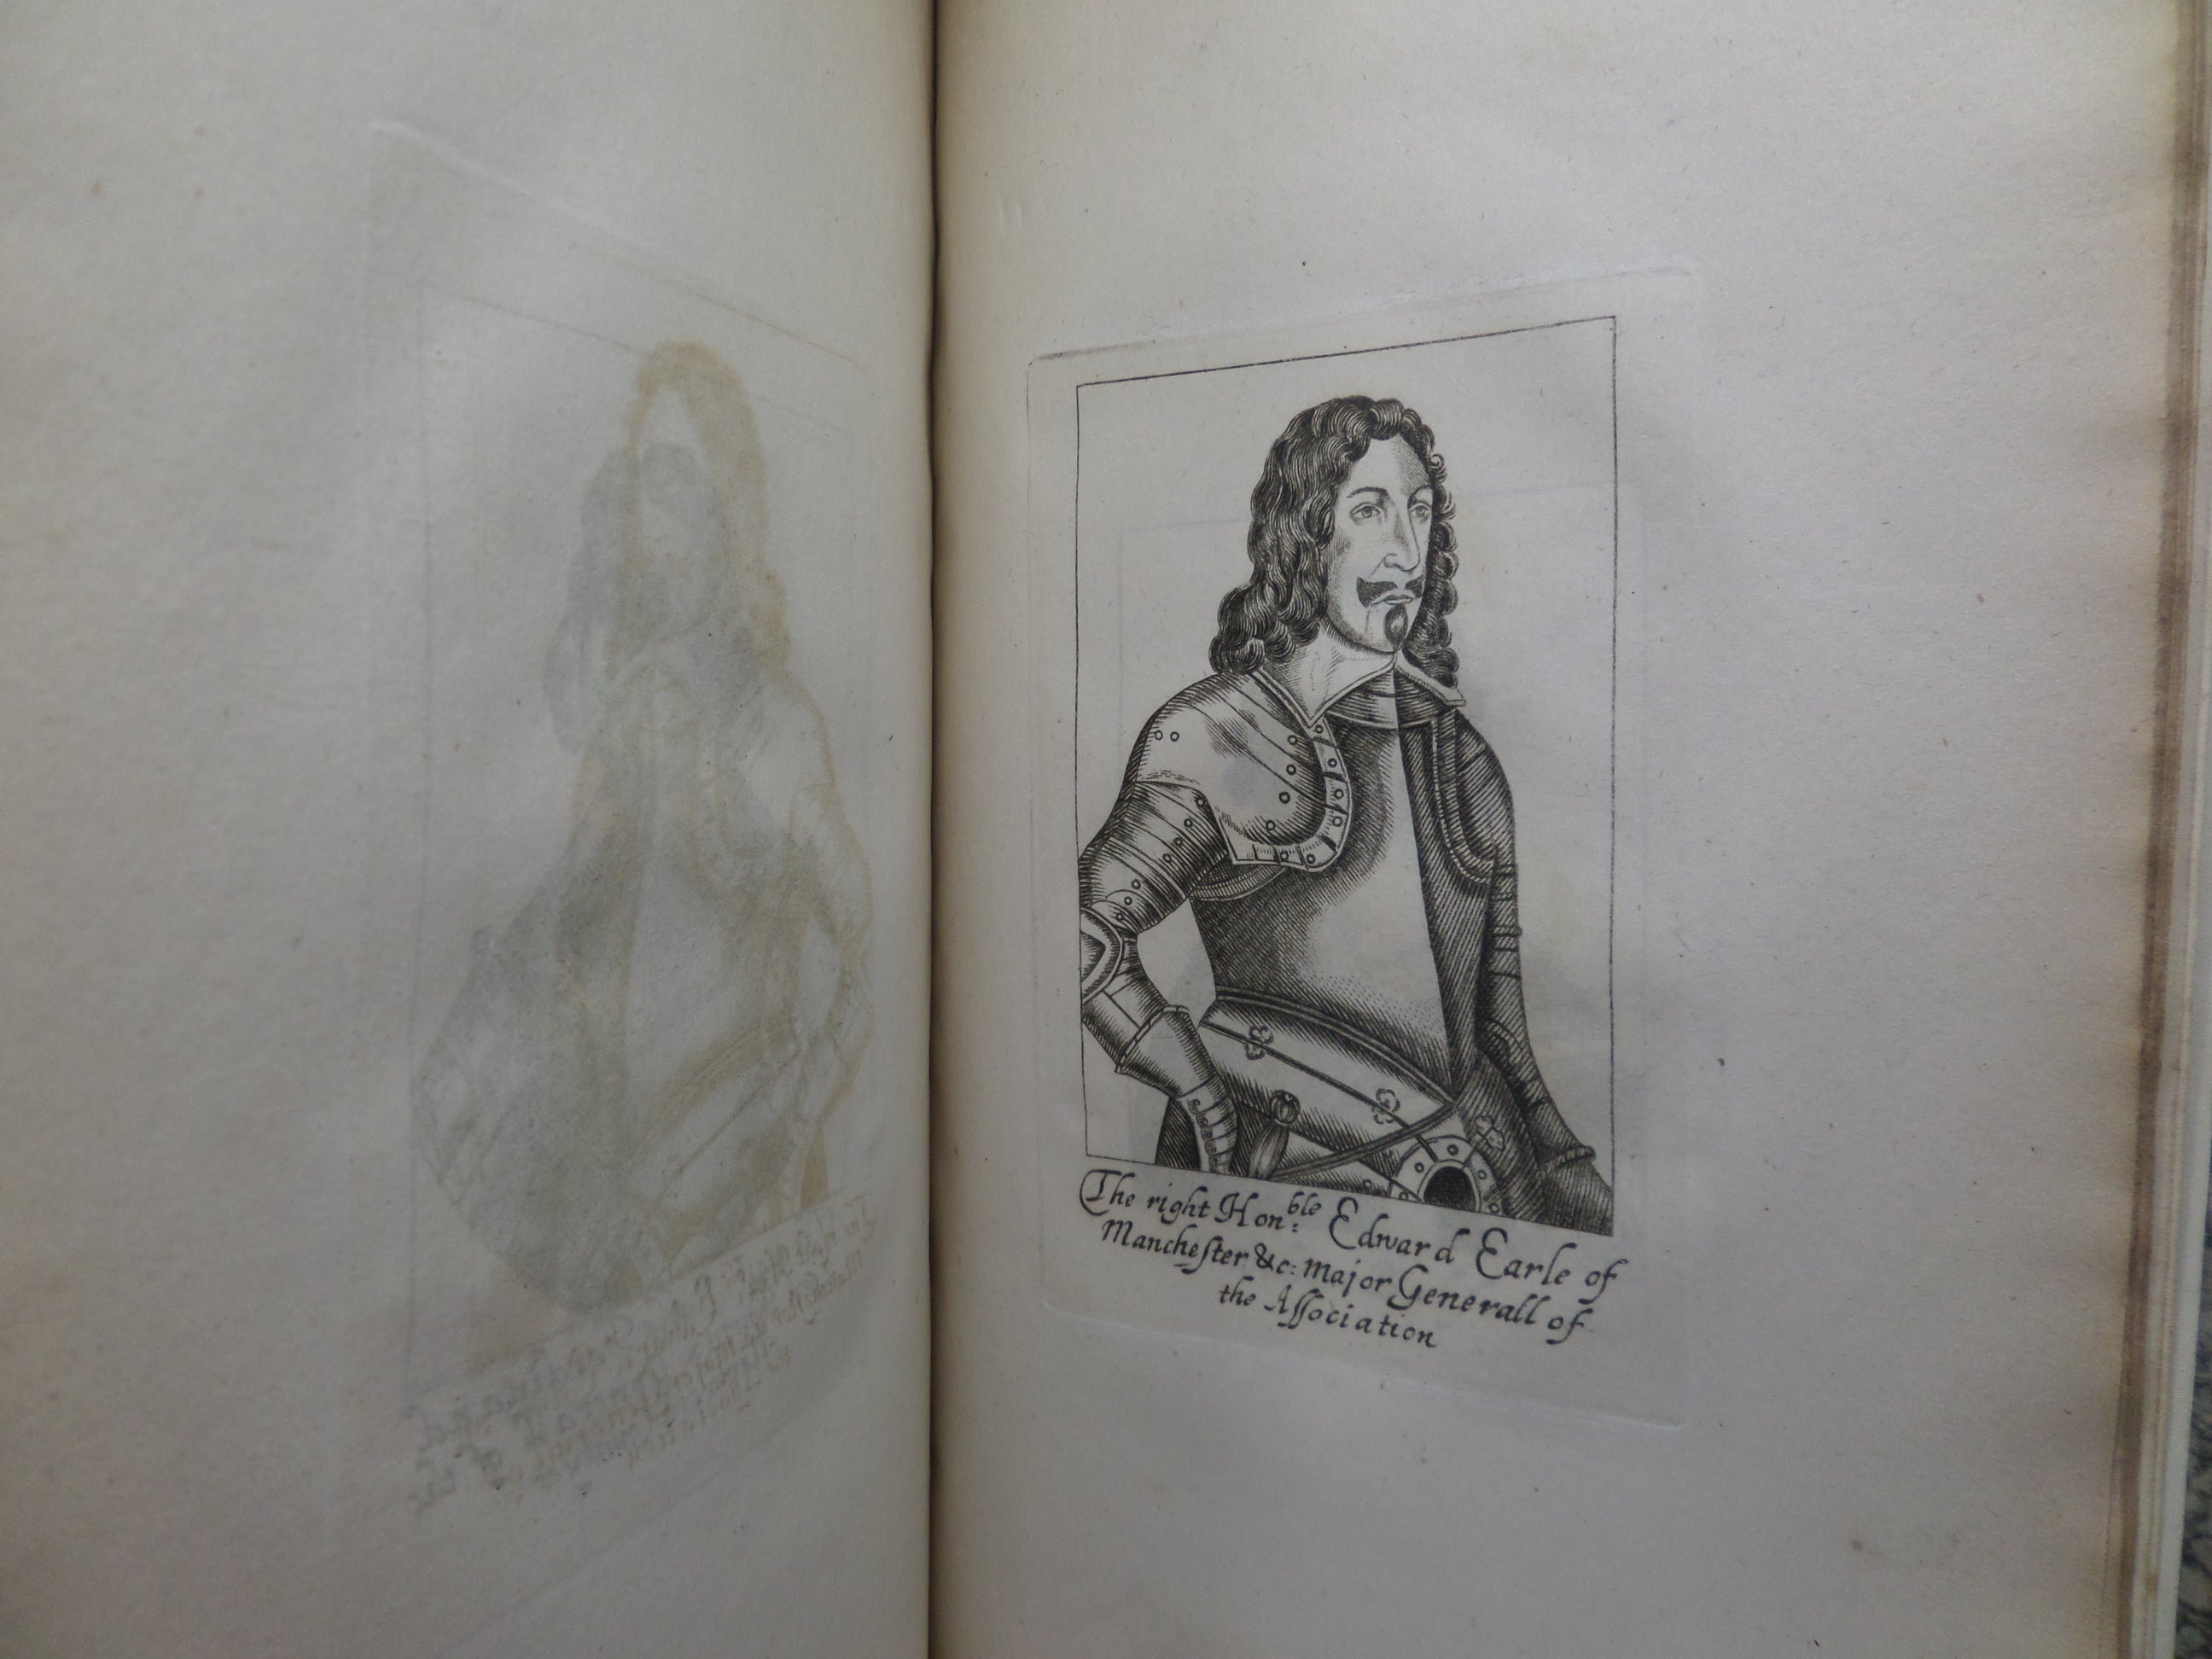 A SURVEY OF ENGLANDS CHAMPIONS BY JOSIAH RICRAFT 1647 [FACSIMILE EDITION 1818]